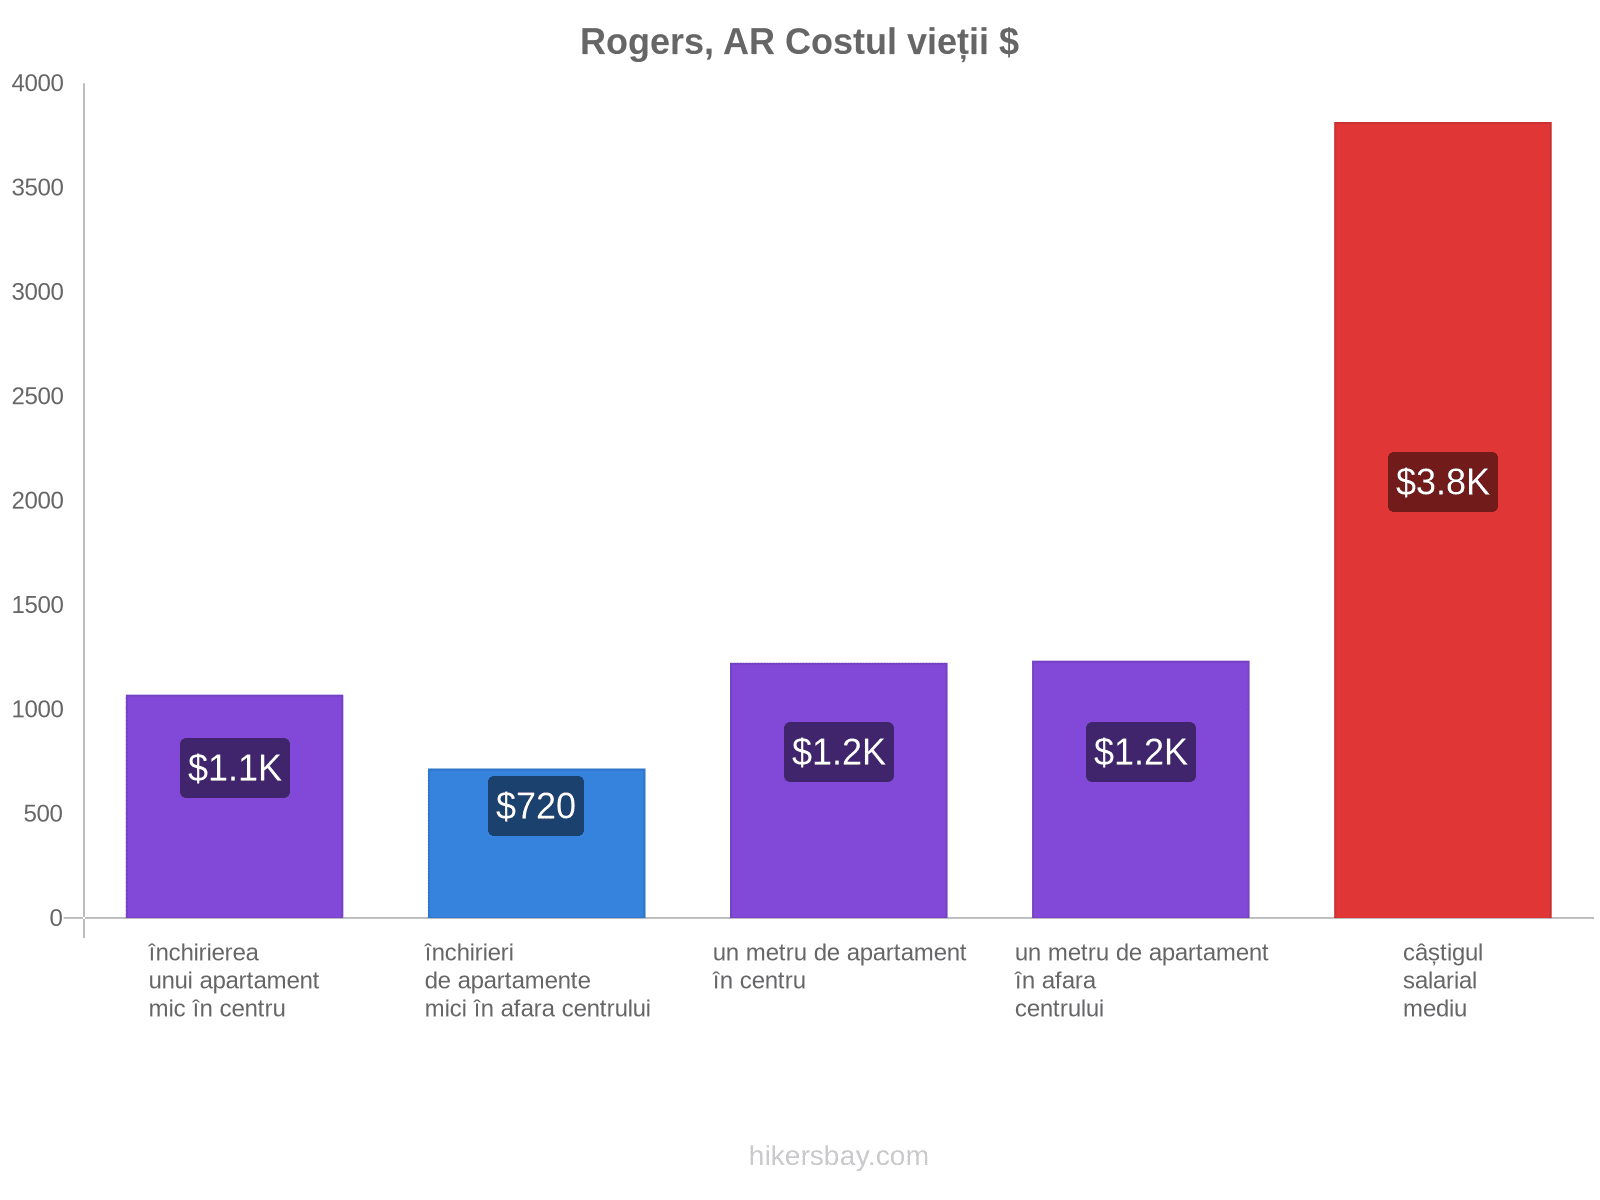 Rogers, AR costul vieții hikersbay.com